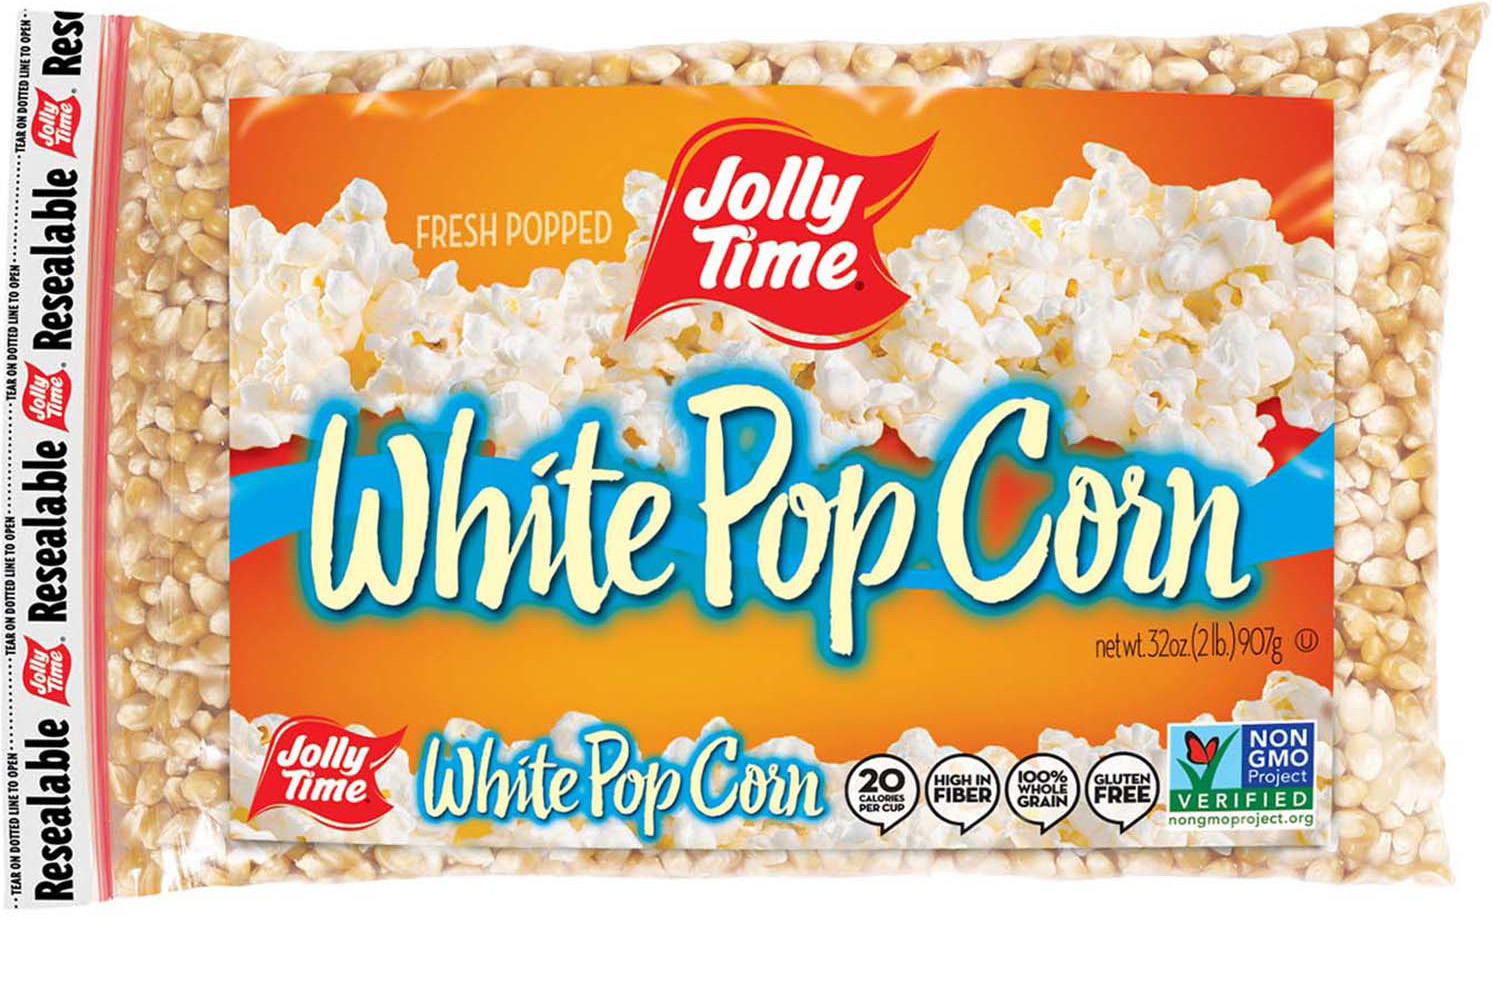 Jolly Time White Popcorn Kernels Product Image